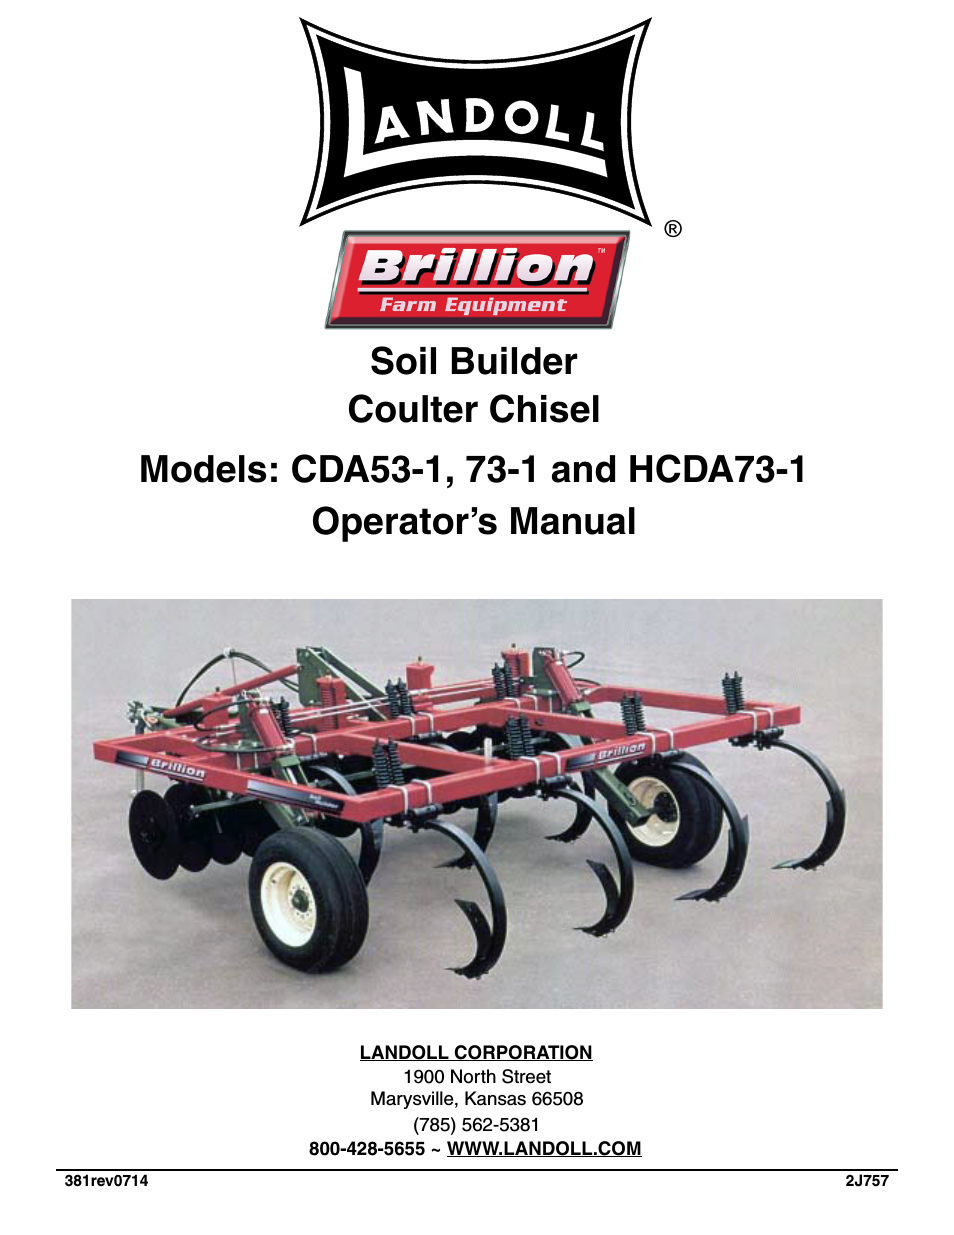 CDA53-1 Soil Builder Coulter Chisel